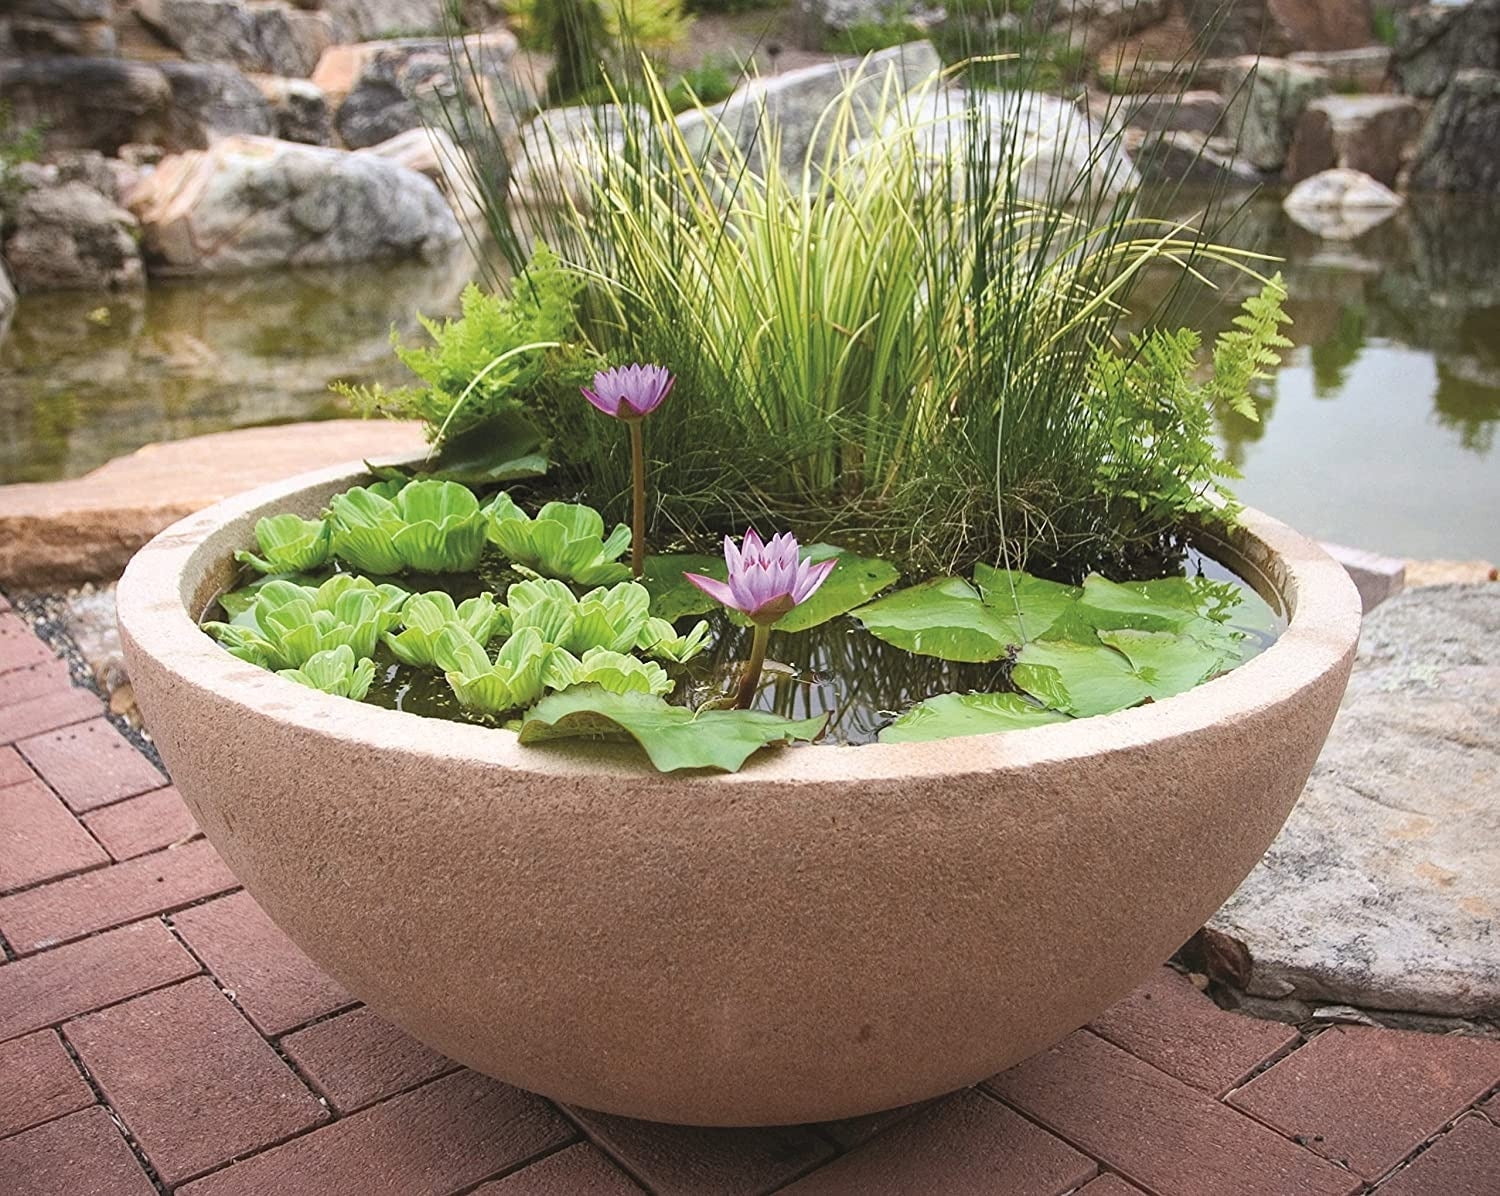  4 pound Pouring Pot : Patio, Lawn & Garden